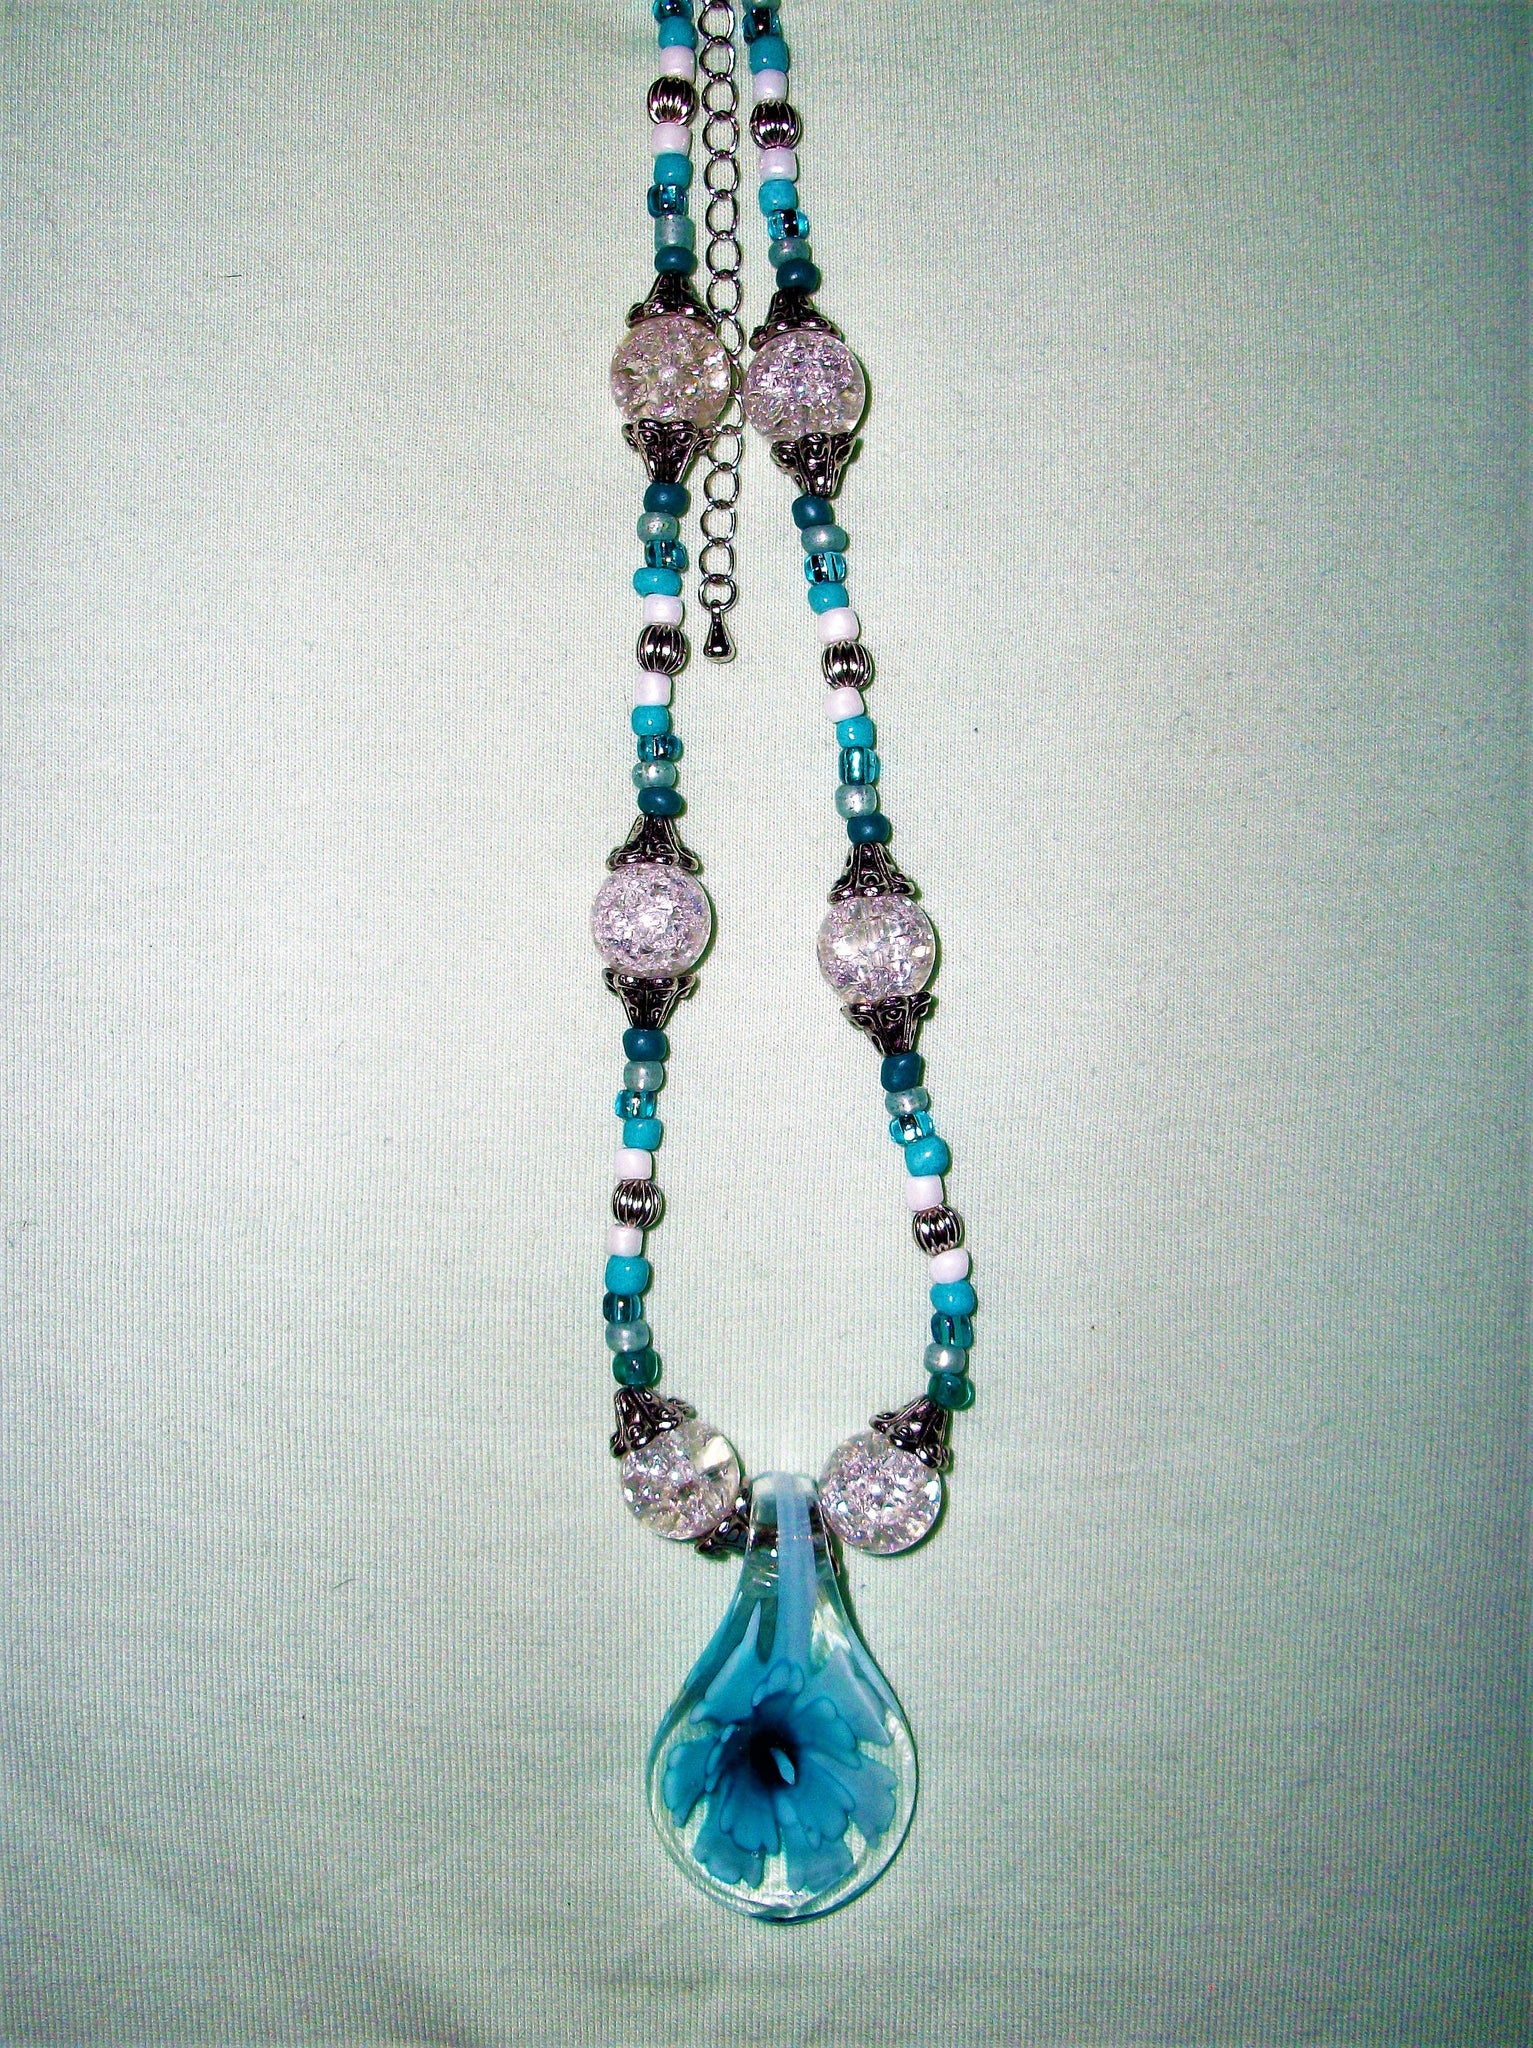 Blue necklace with a blue flower pendant.